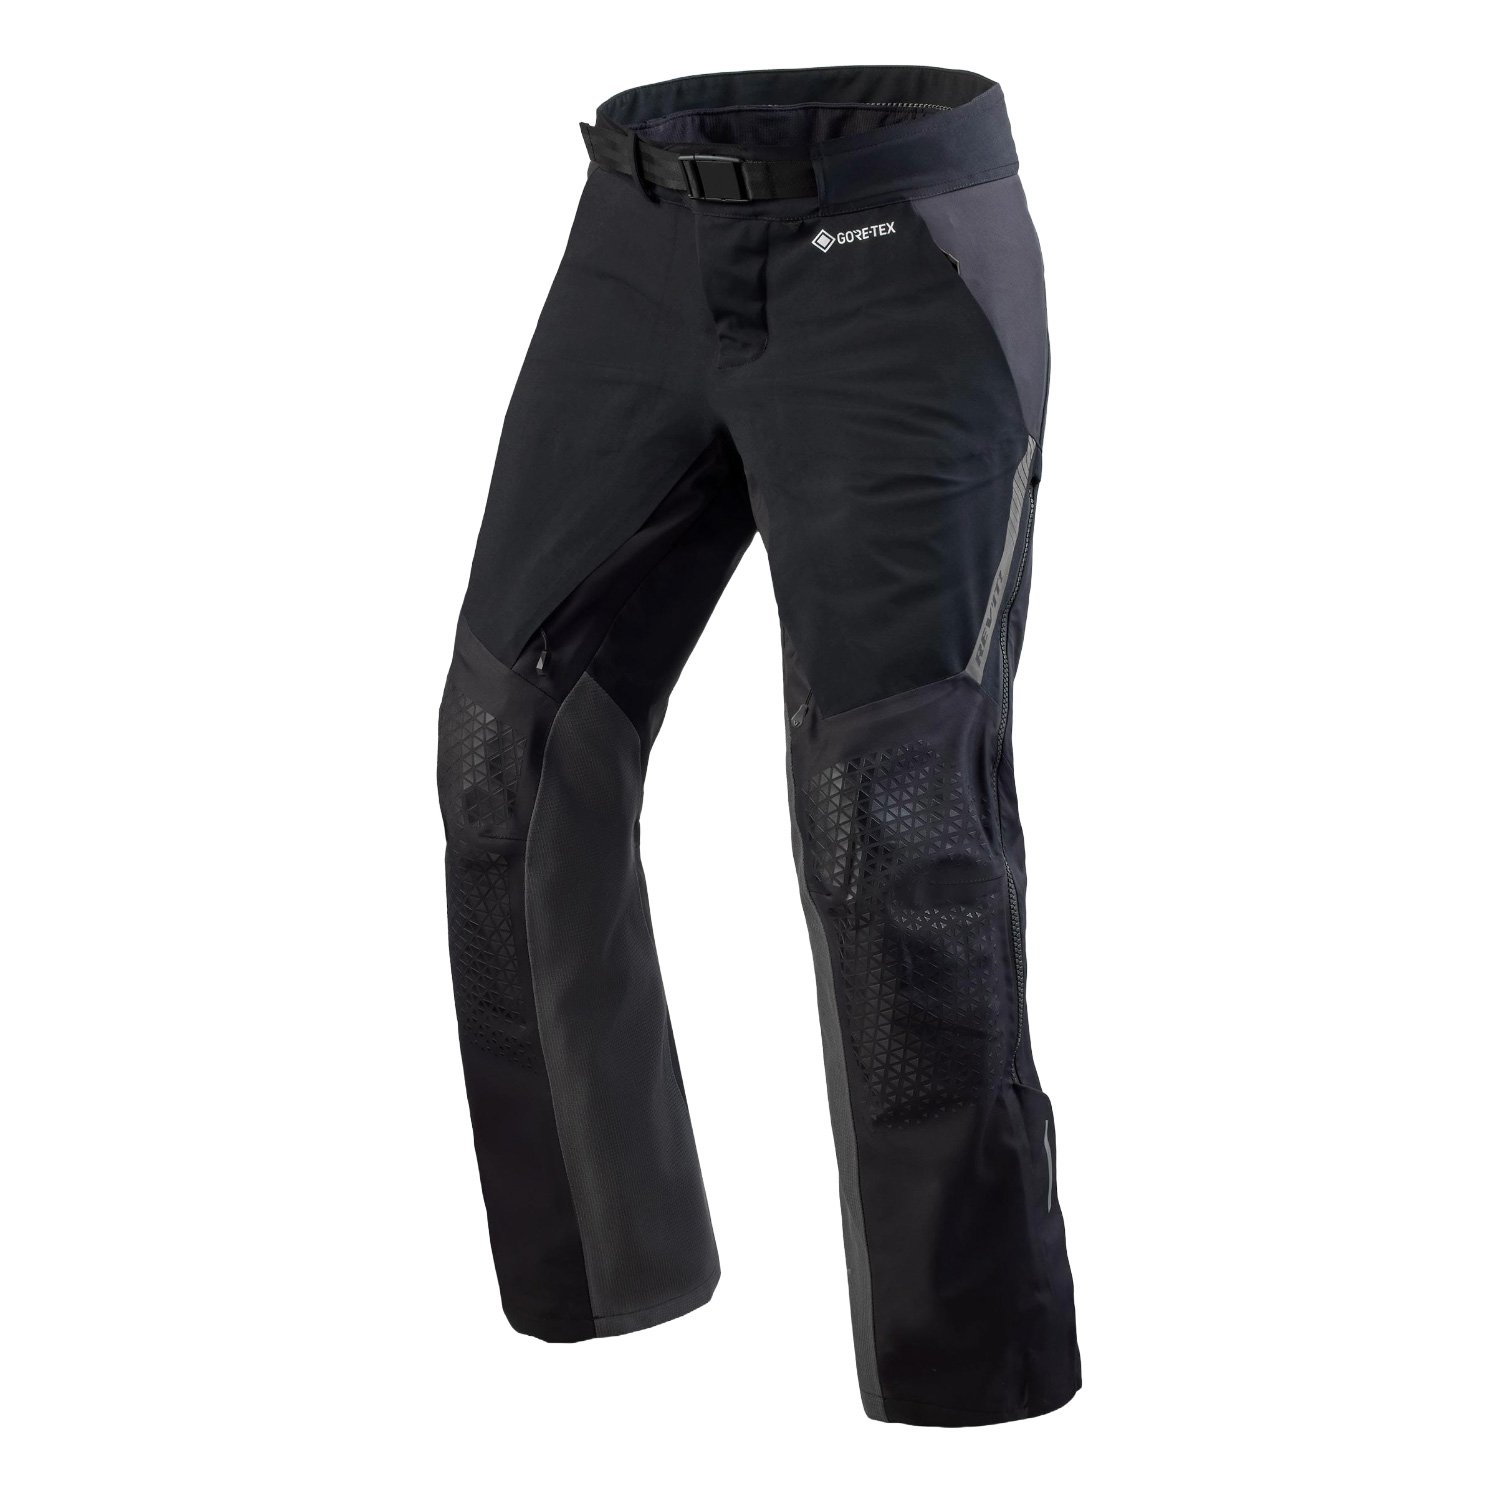 Image of REV'IT! Stratum GTX Black Grey Standard Motorcycle Pants Size 2XL ID 8700001351164